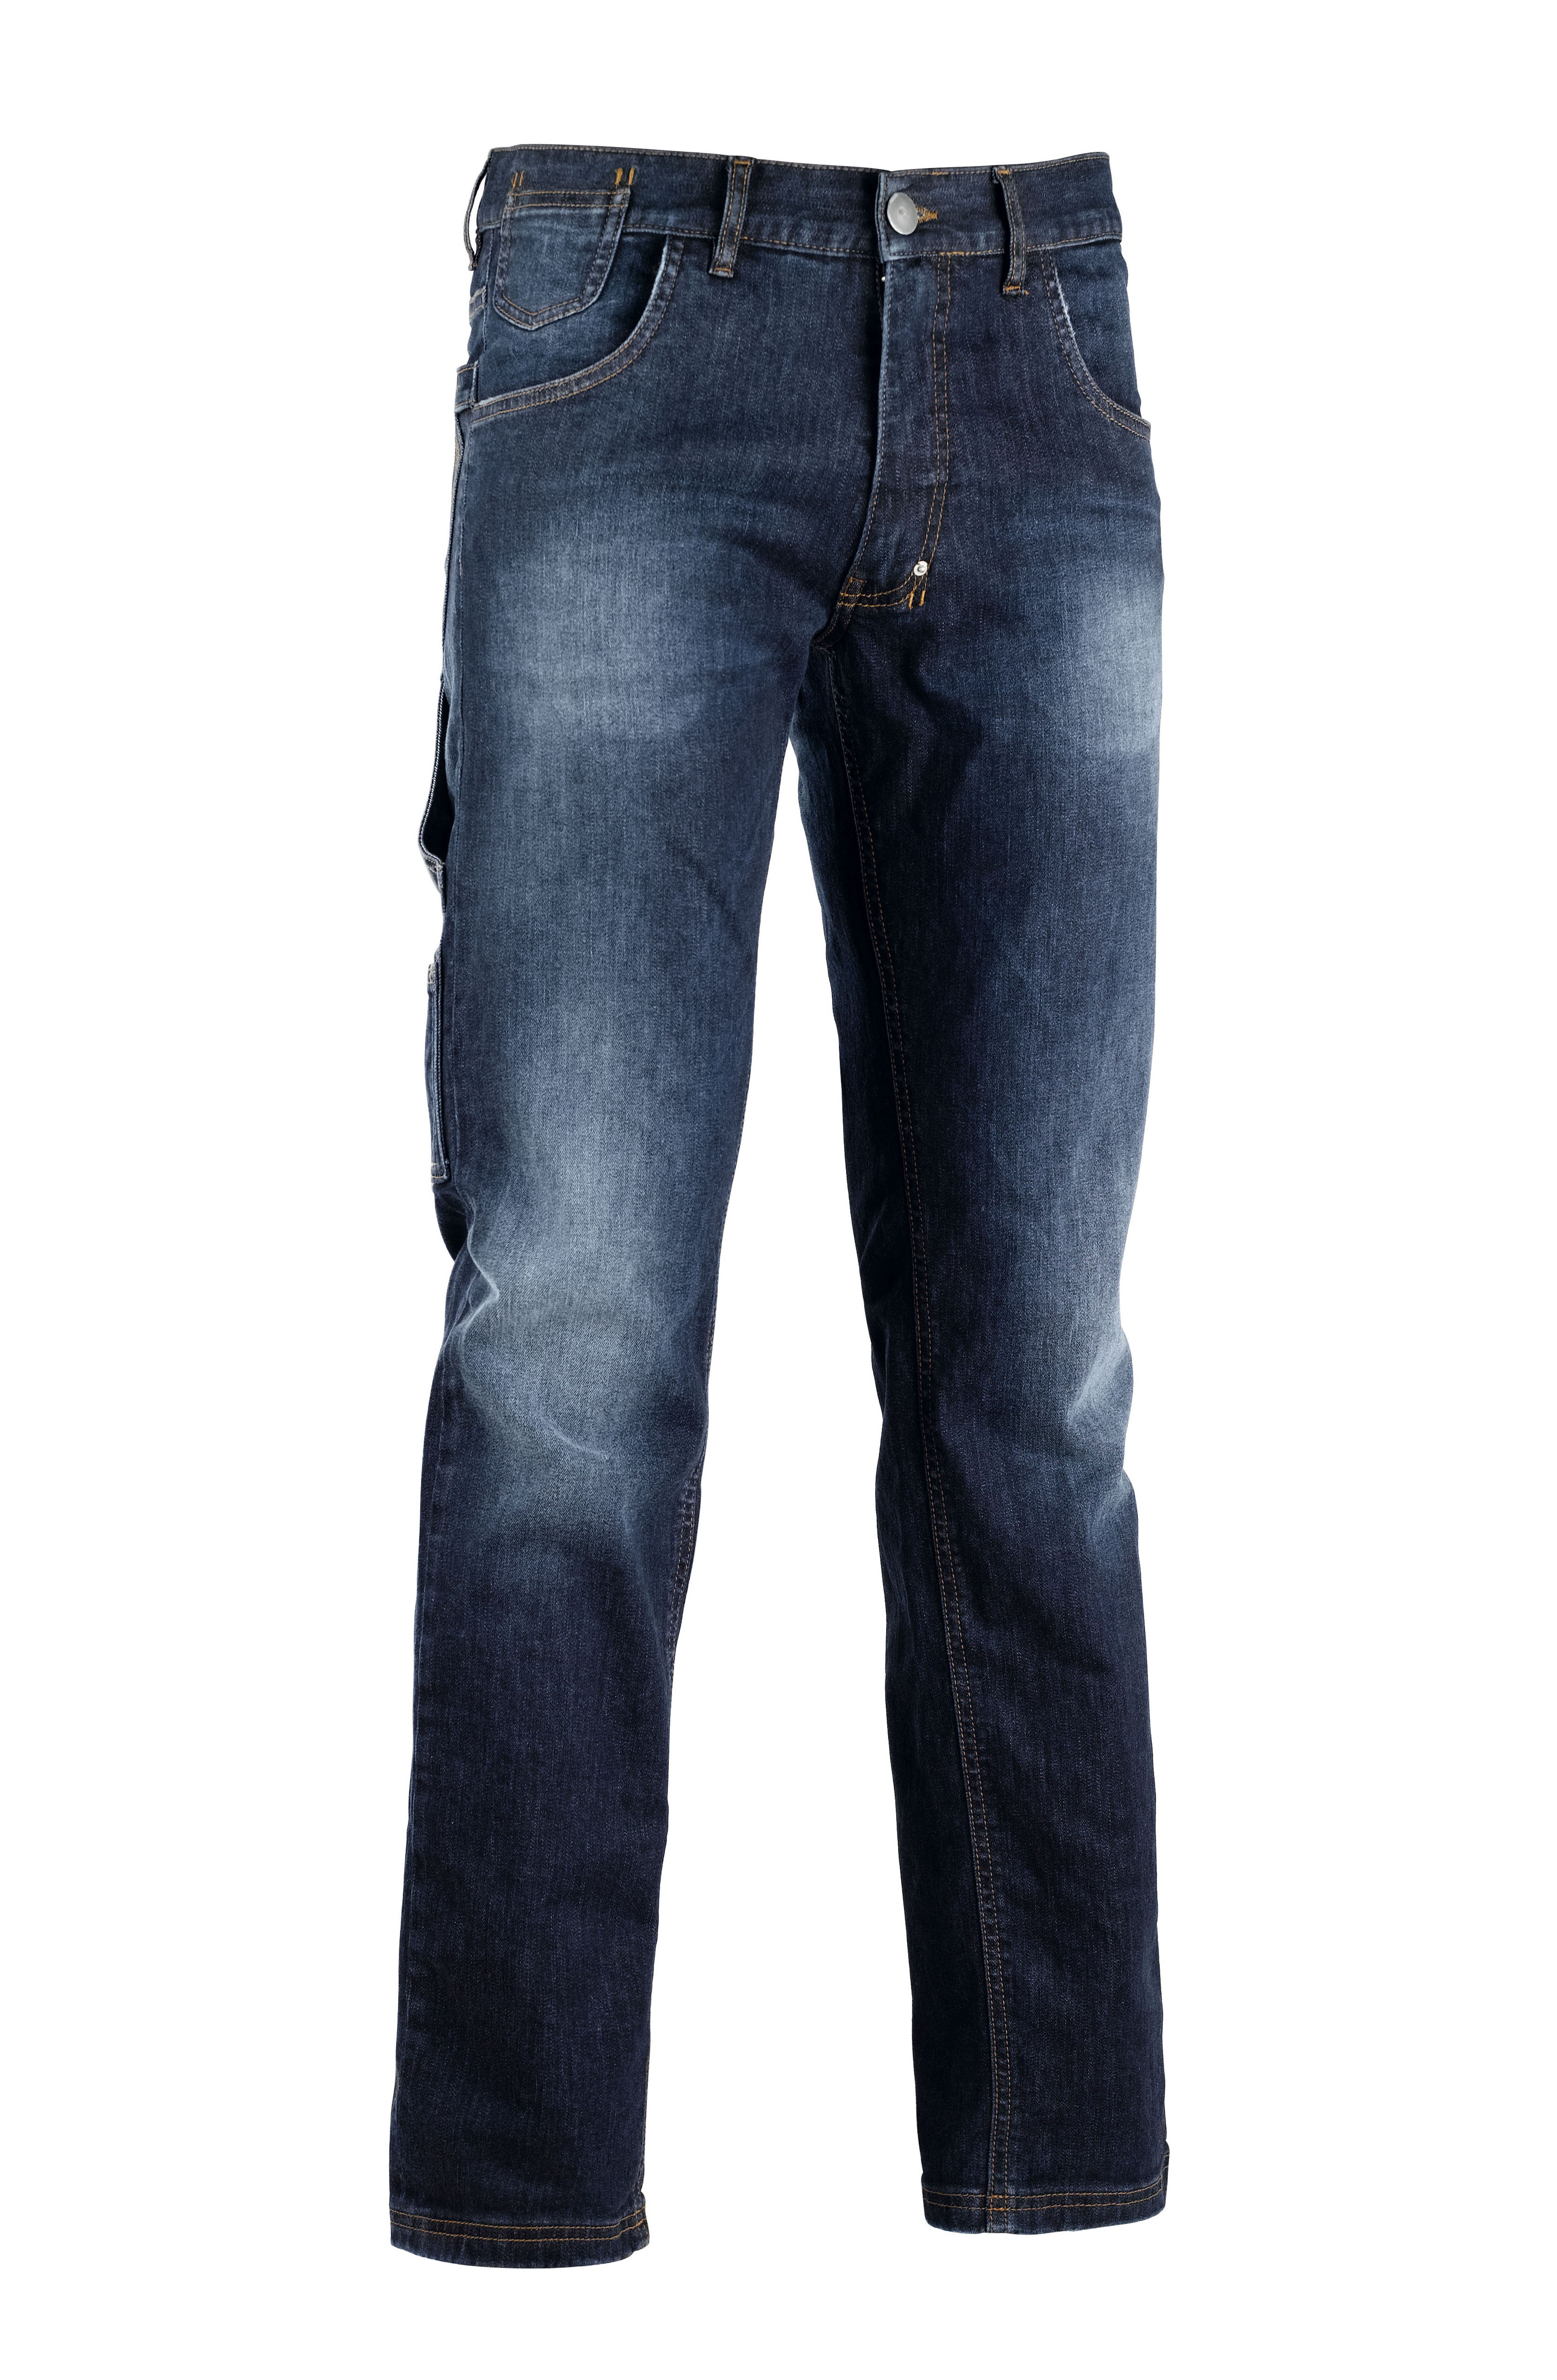 Pantalone stone blu jeans lavato tg s